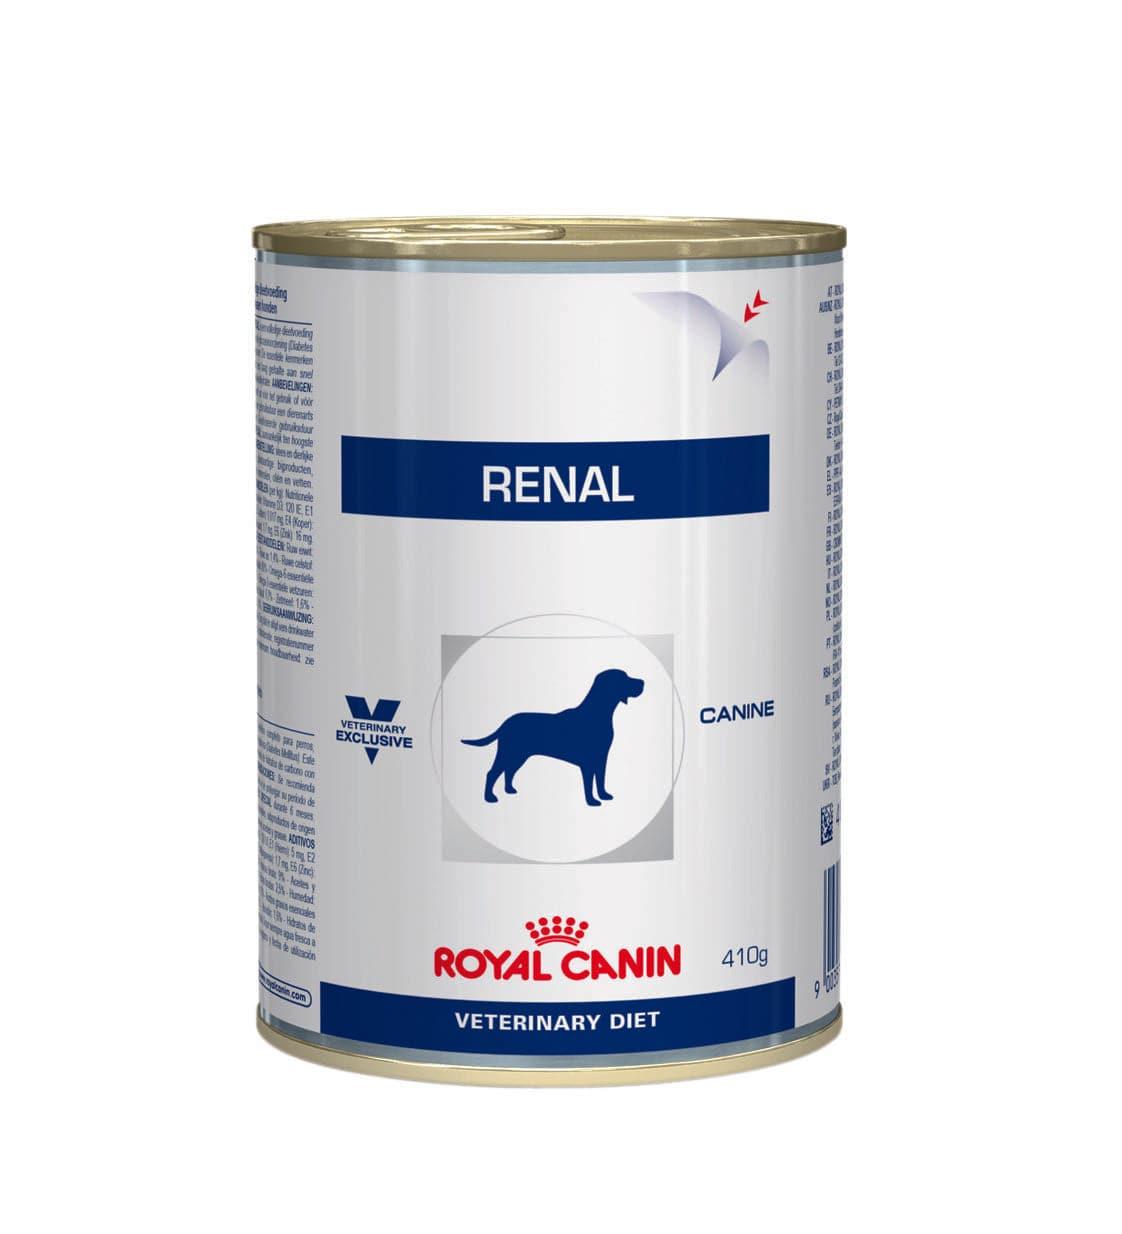 Renal Dog Dosen - Royal Canin Veterinary Diet - Alter:Adult, Alter:Senior, Erkrankung:Niere, Futterart:Nass, Geschmack:Huhn, Tierart:Hund - Marigin AG Onlineshop für Tierbedarf